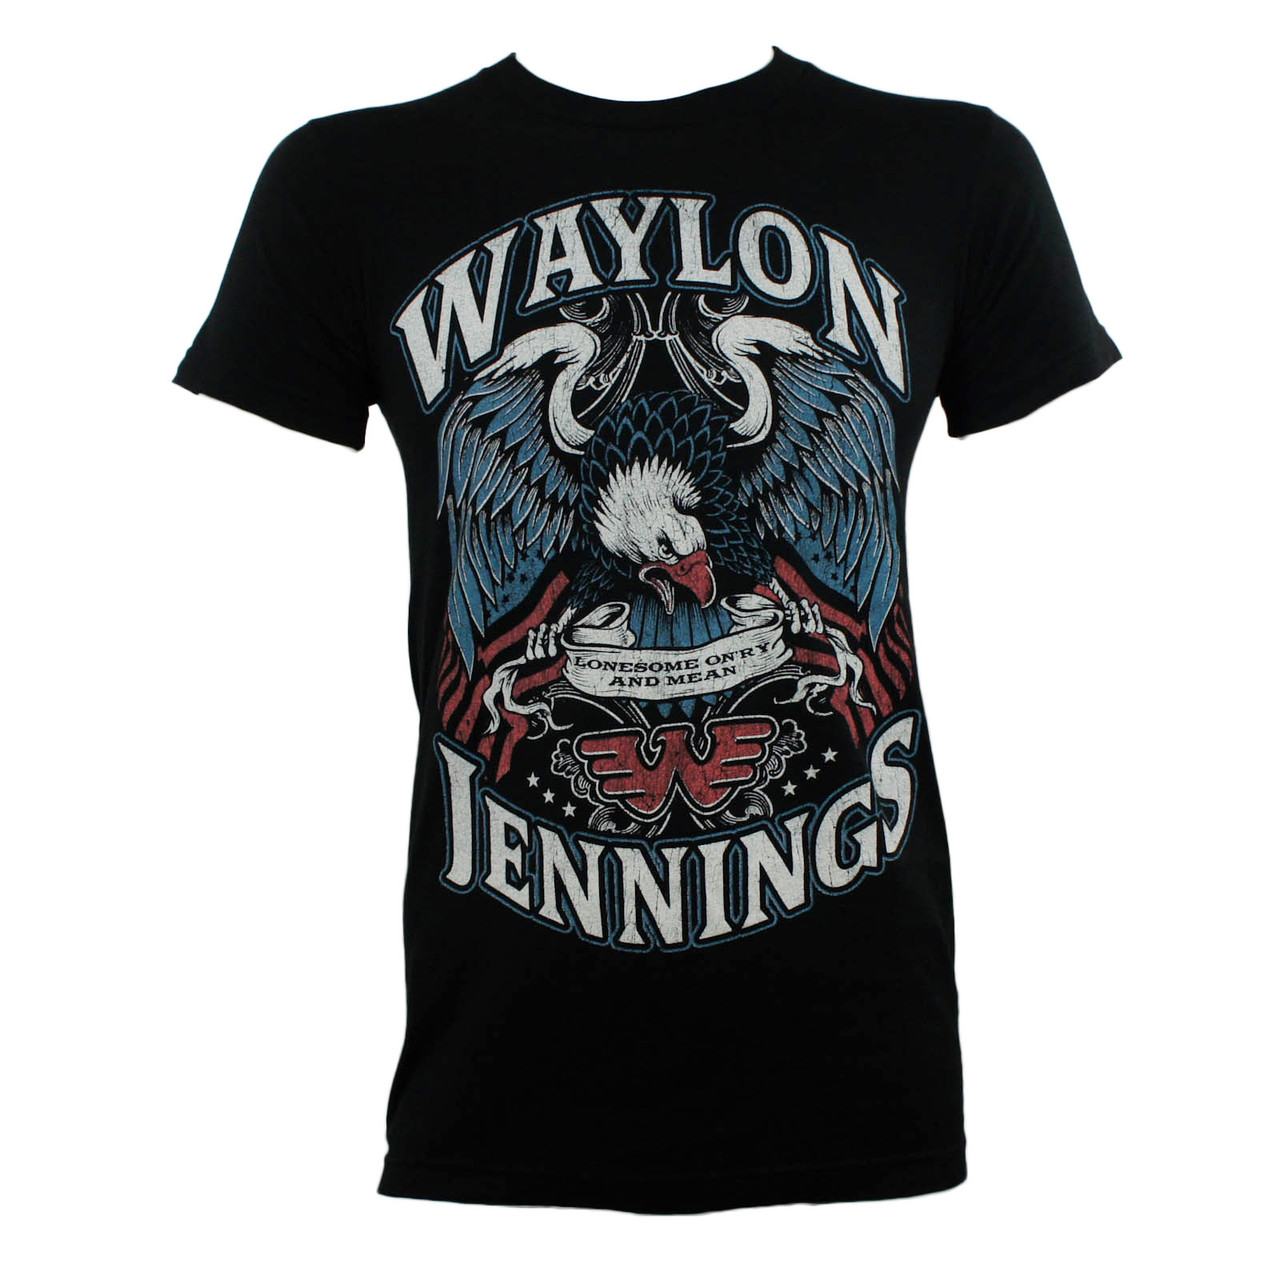 Waylon Jennings T-Shirt - Lonesome - Merch2rock Alternative Clothing